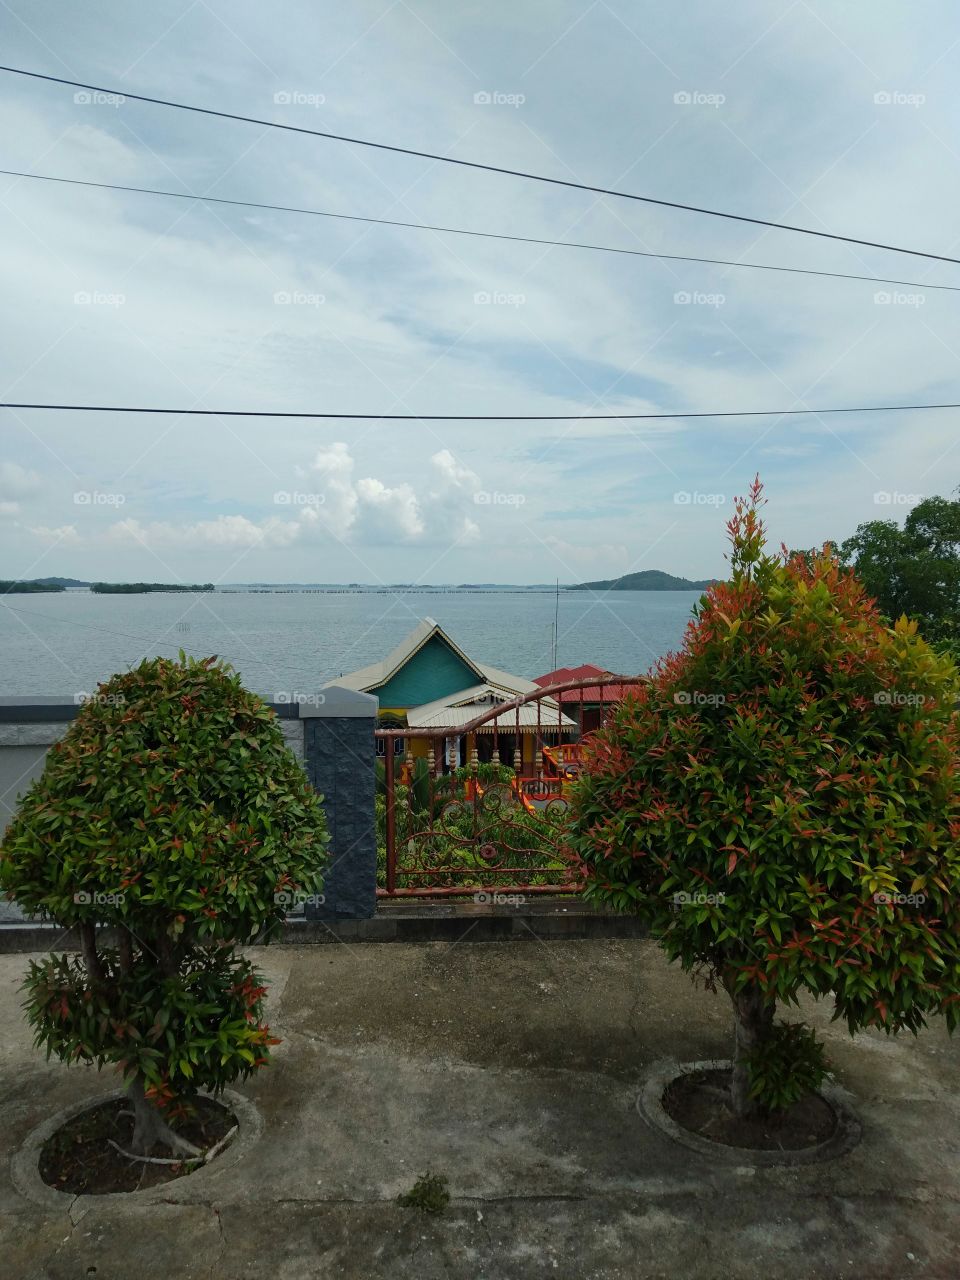 sights on the island of Batam ... # indonesia